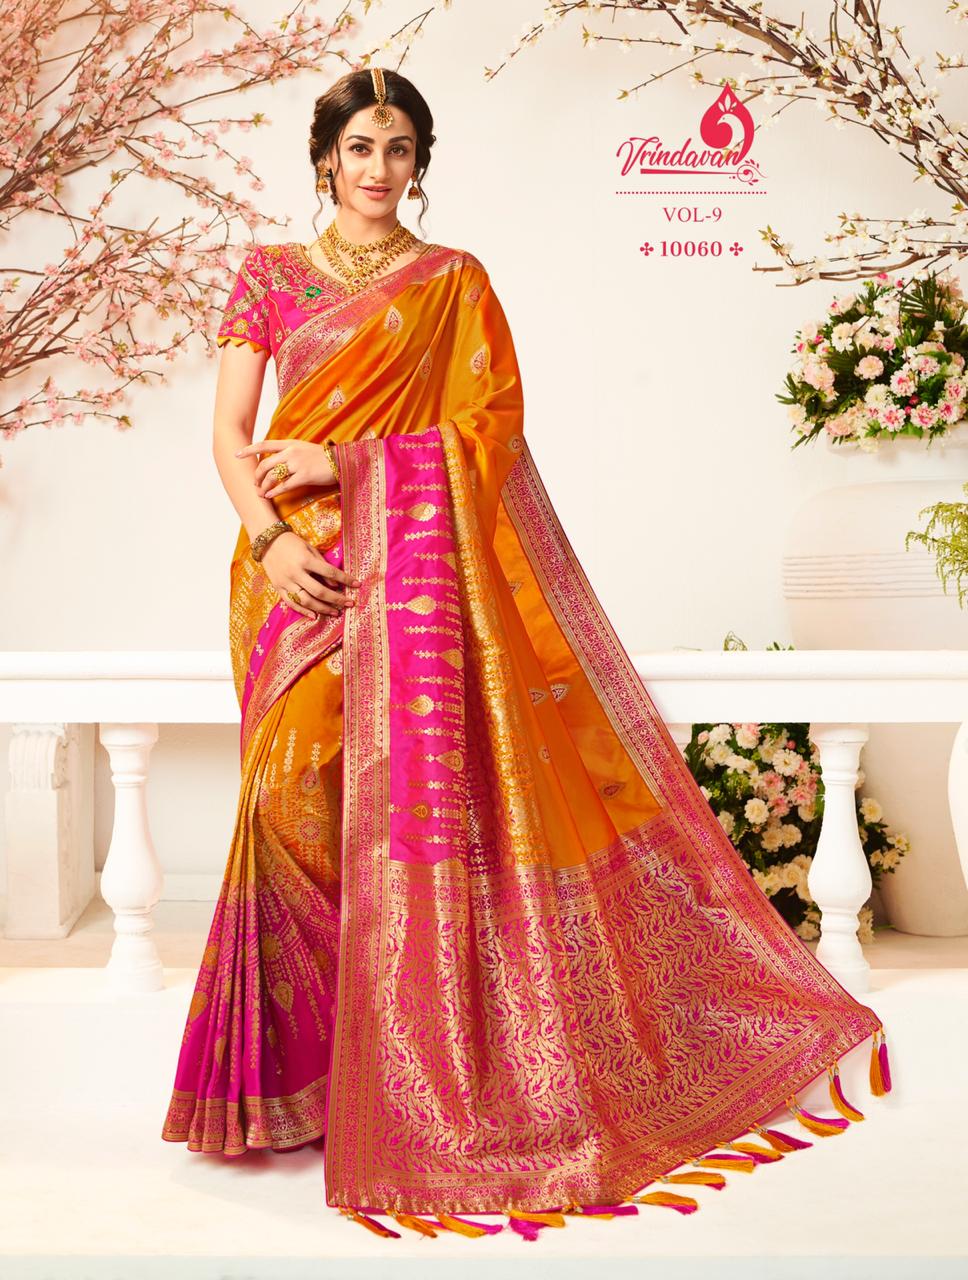 Royal Presents Vrindavan Vol-9 Bridal Designer Wedding Season Special Banarasi Silk Sarees Catalogue Wholesaler